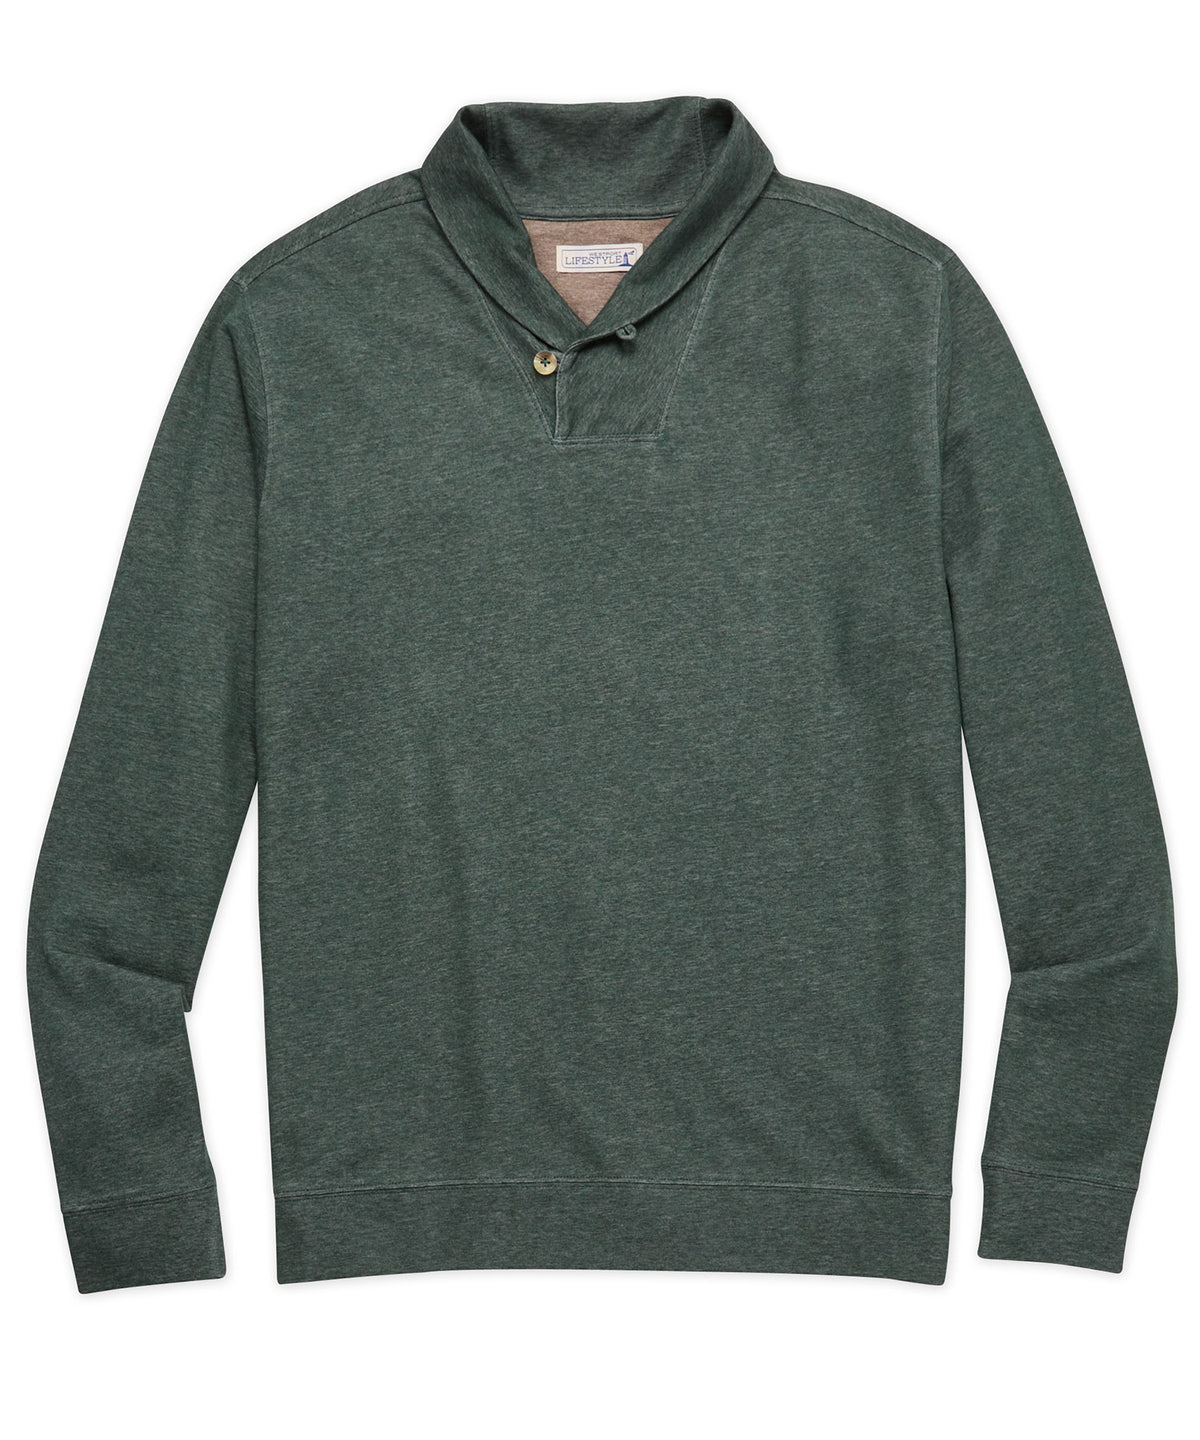 Westport Lifestyle Shawl Collar Sweater, Men's Big & Tall